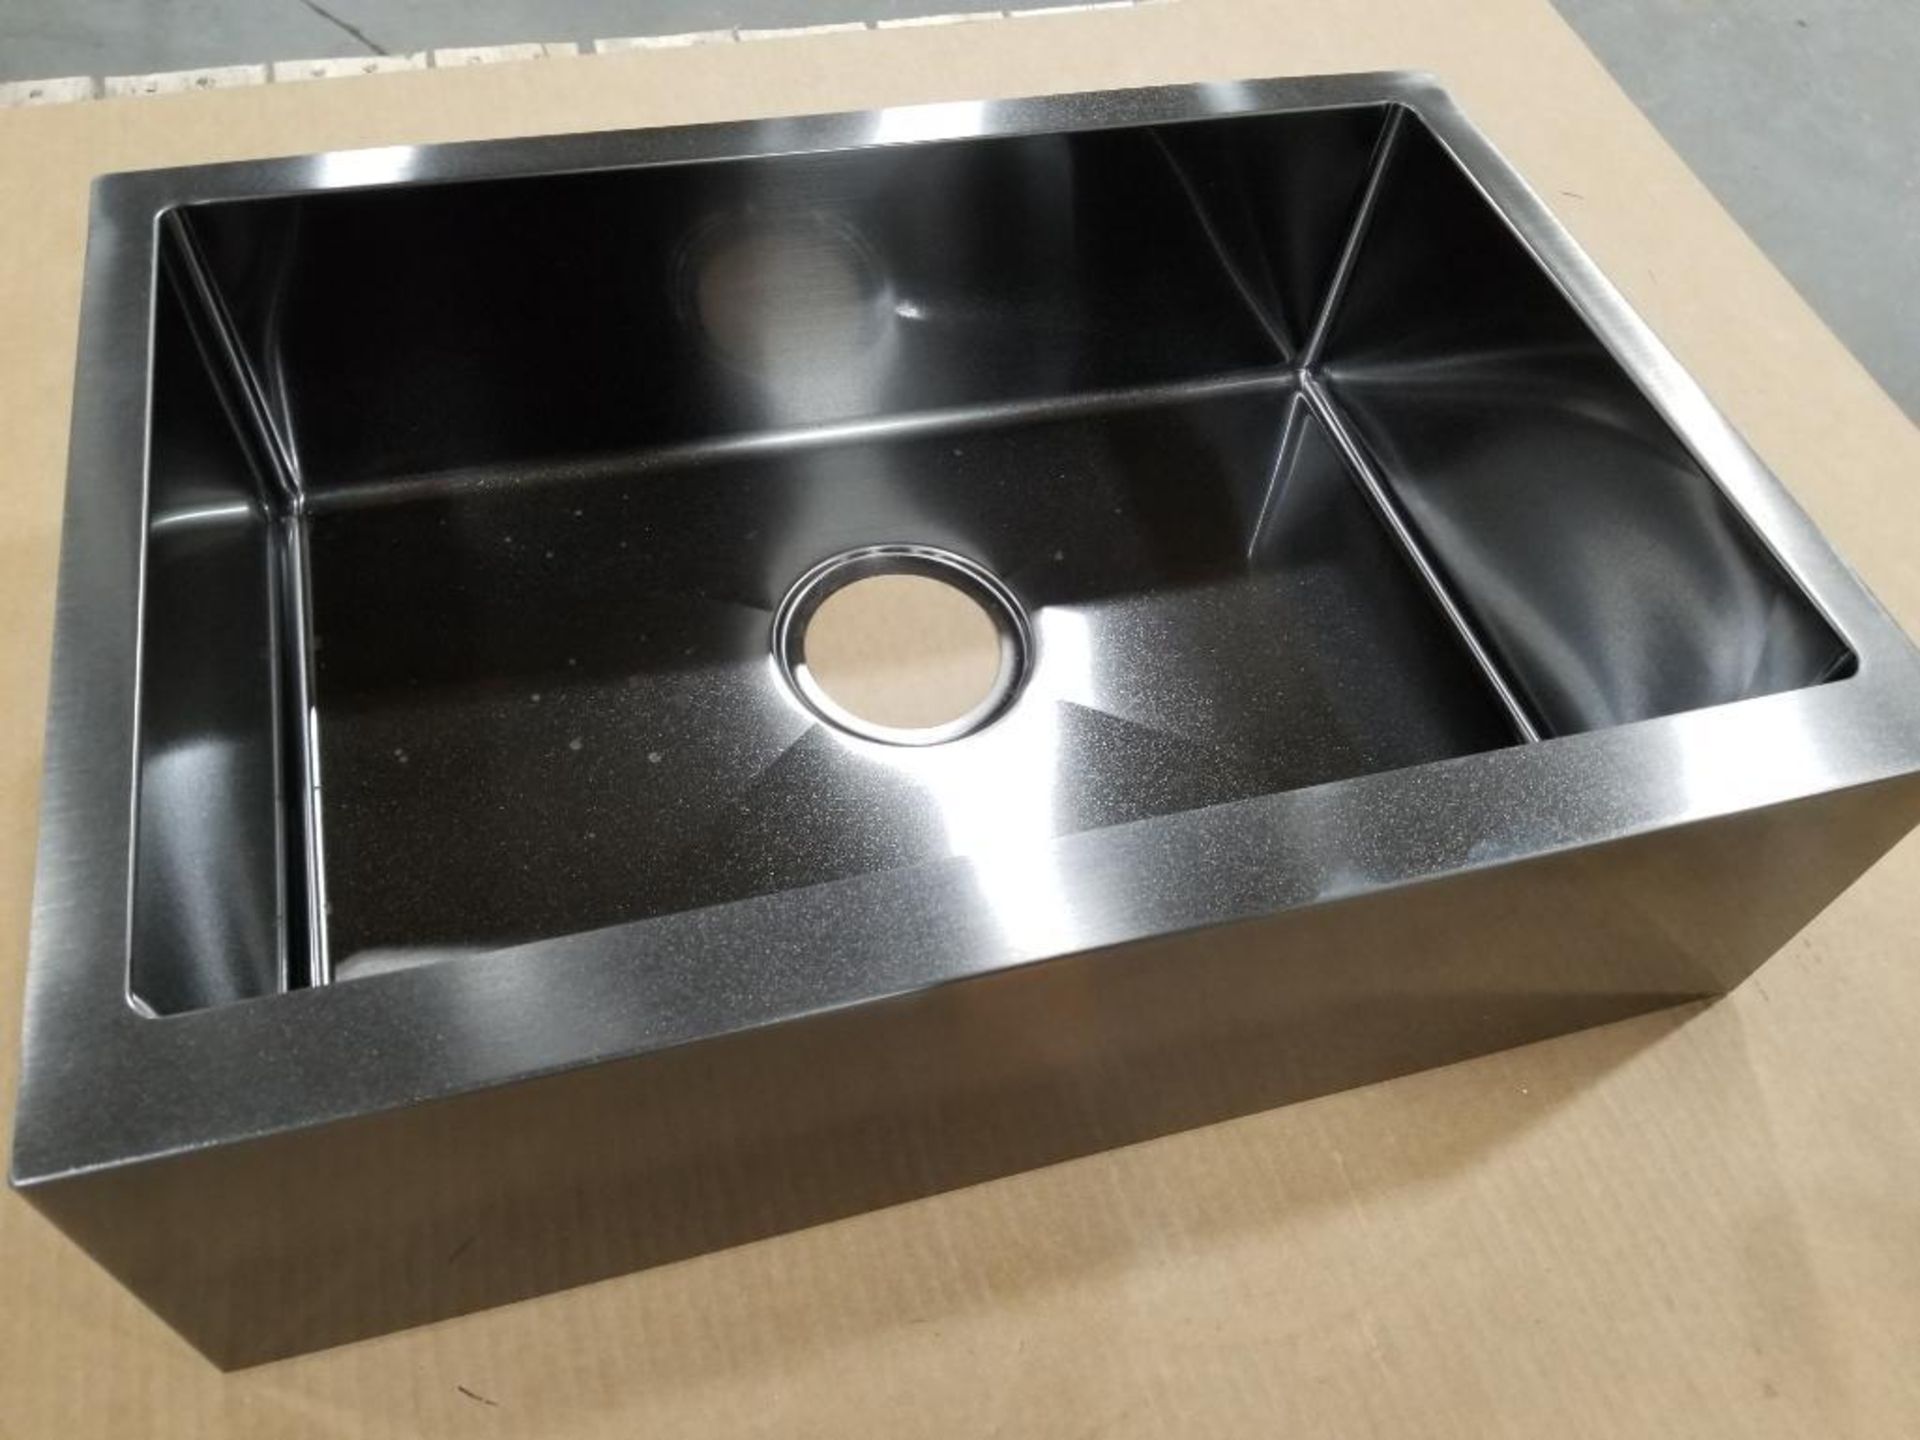 Qty 4 - Single basin kitchen sink. - Image 2 of 6